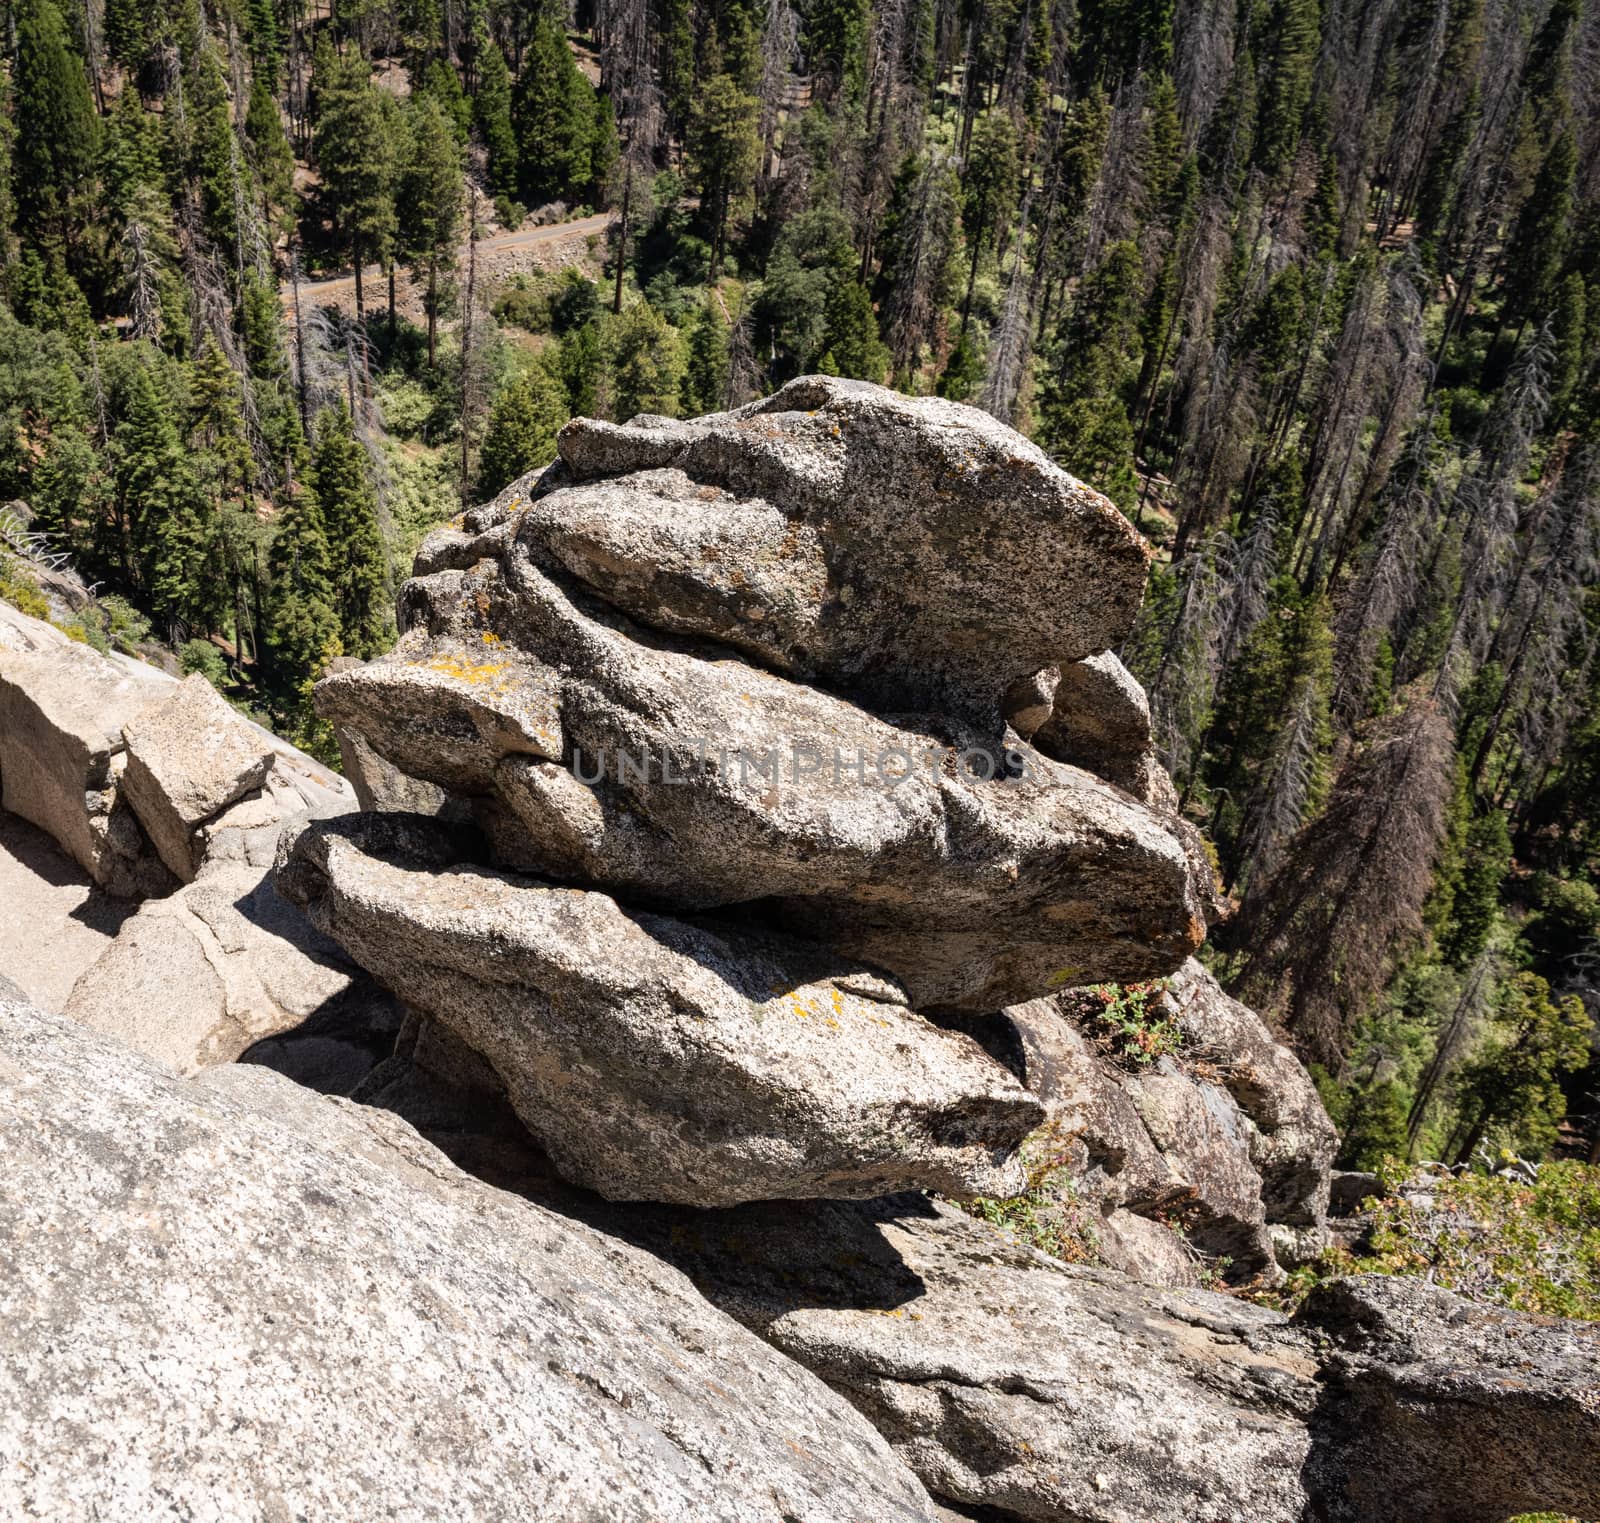 Granite boulder on Moro Rock in Sequoia National Park, California by Njean